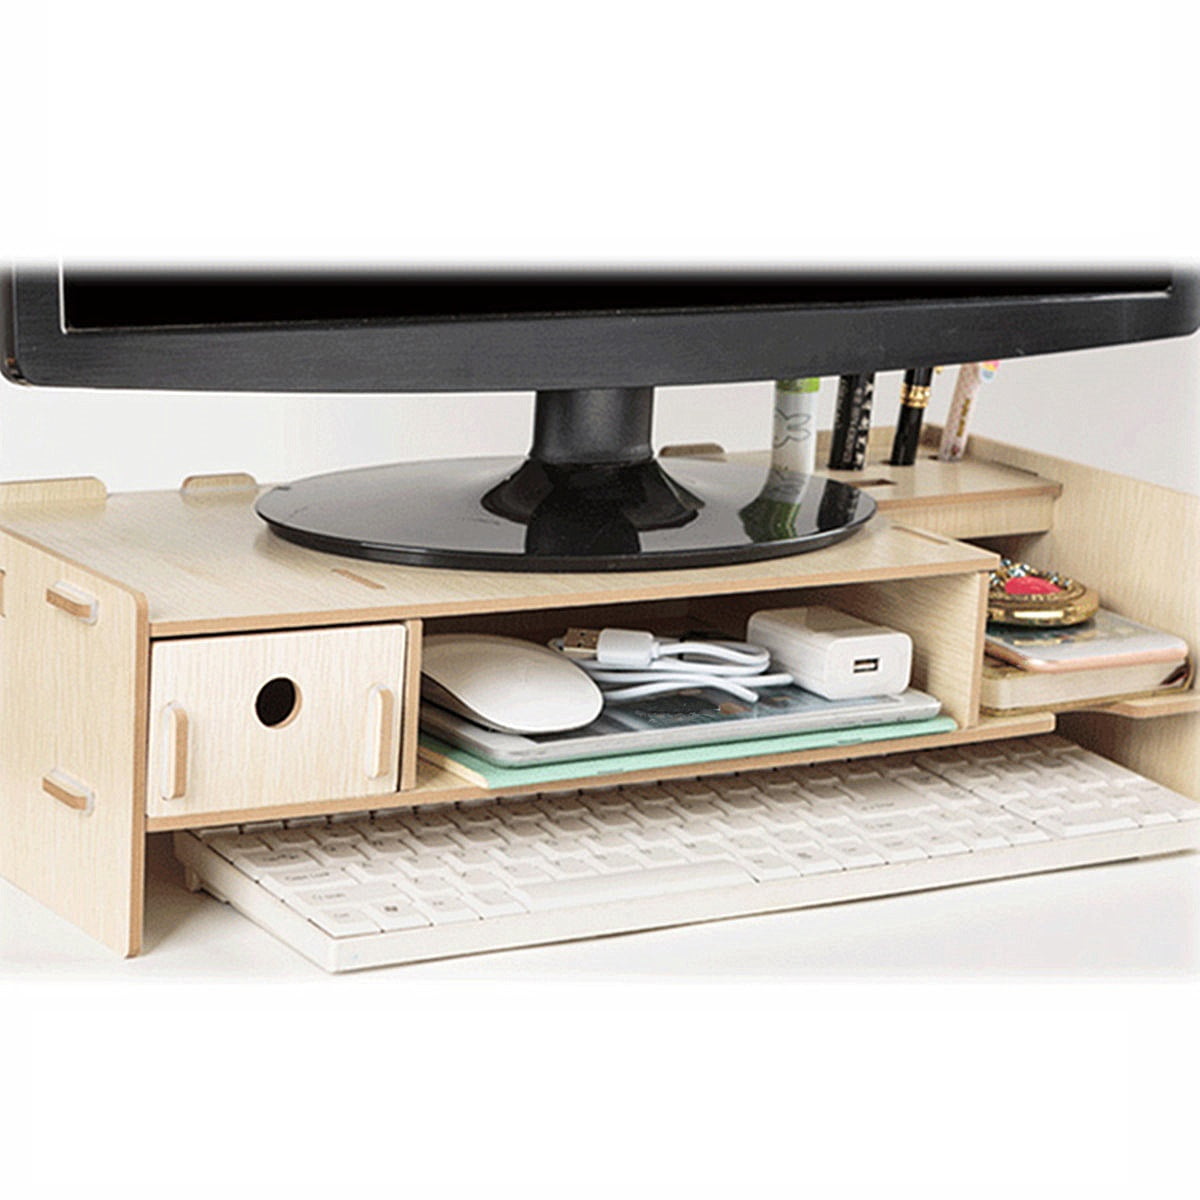 Wooden Monitor Stand Riser Organizer for Office School Computer Desk GL 